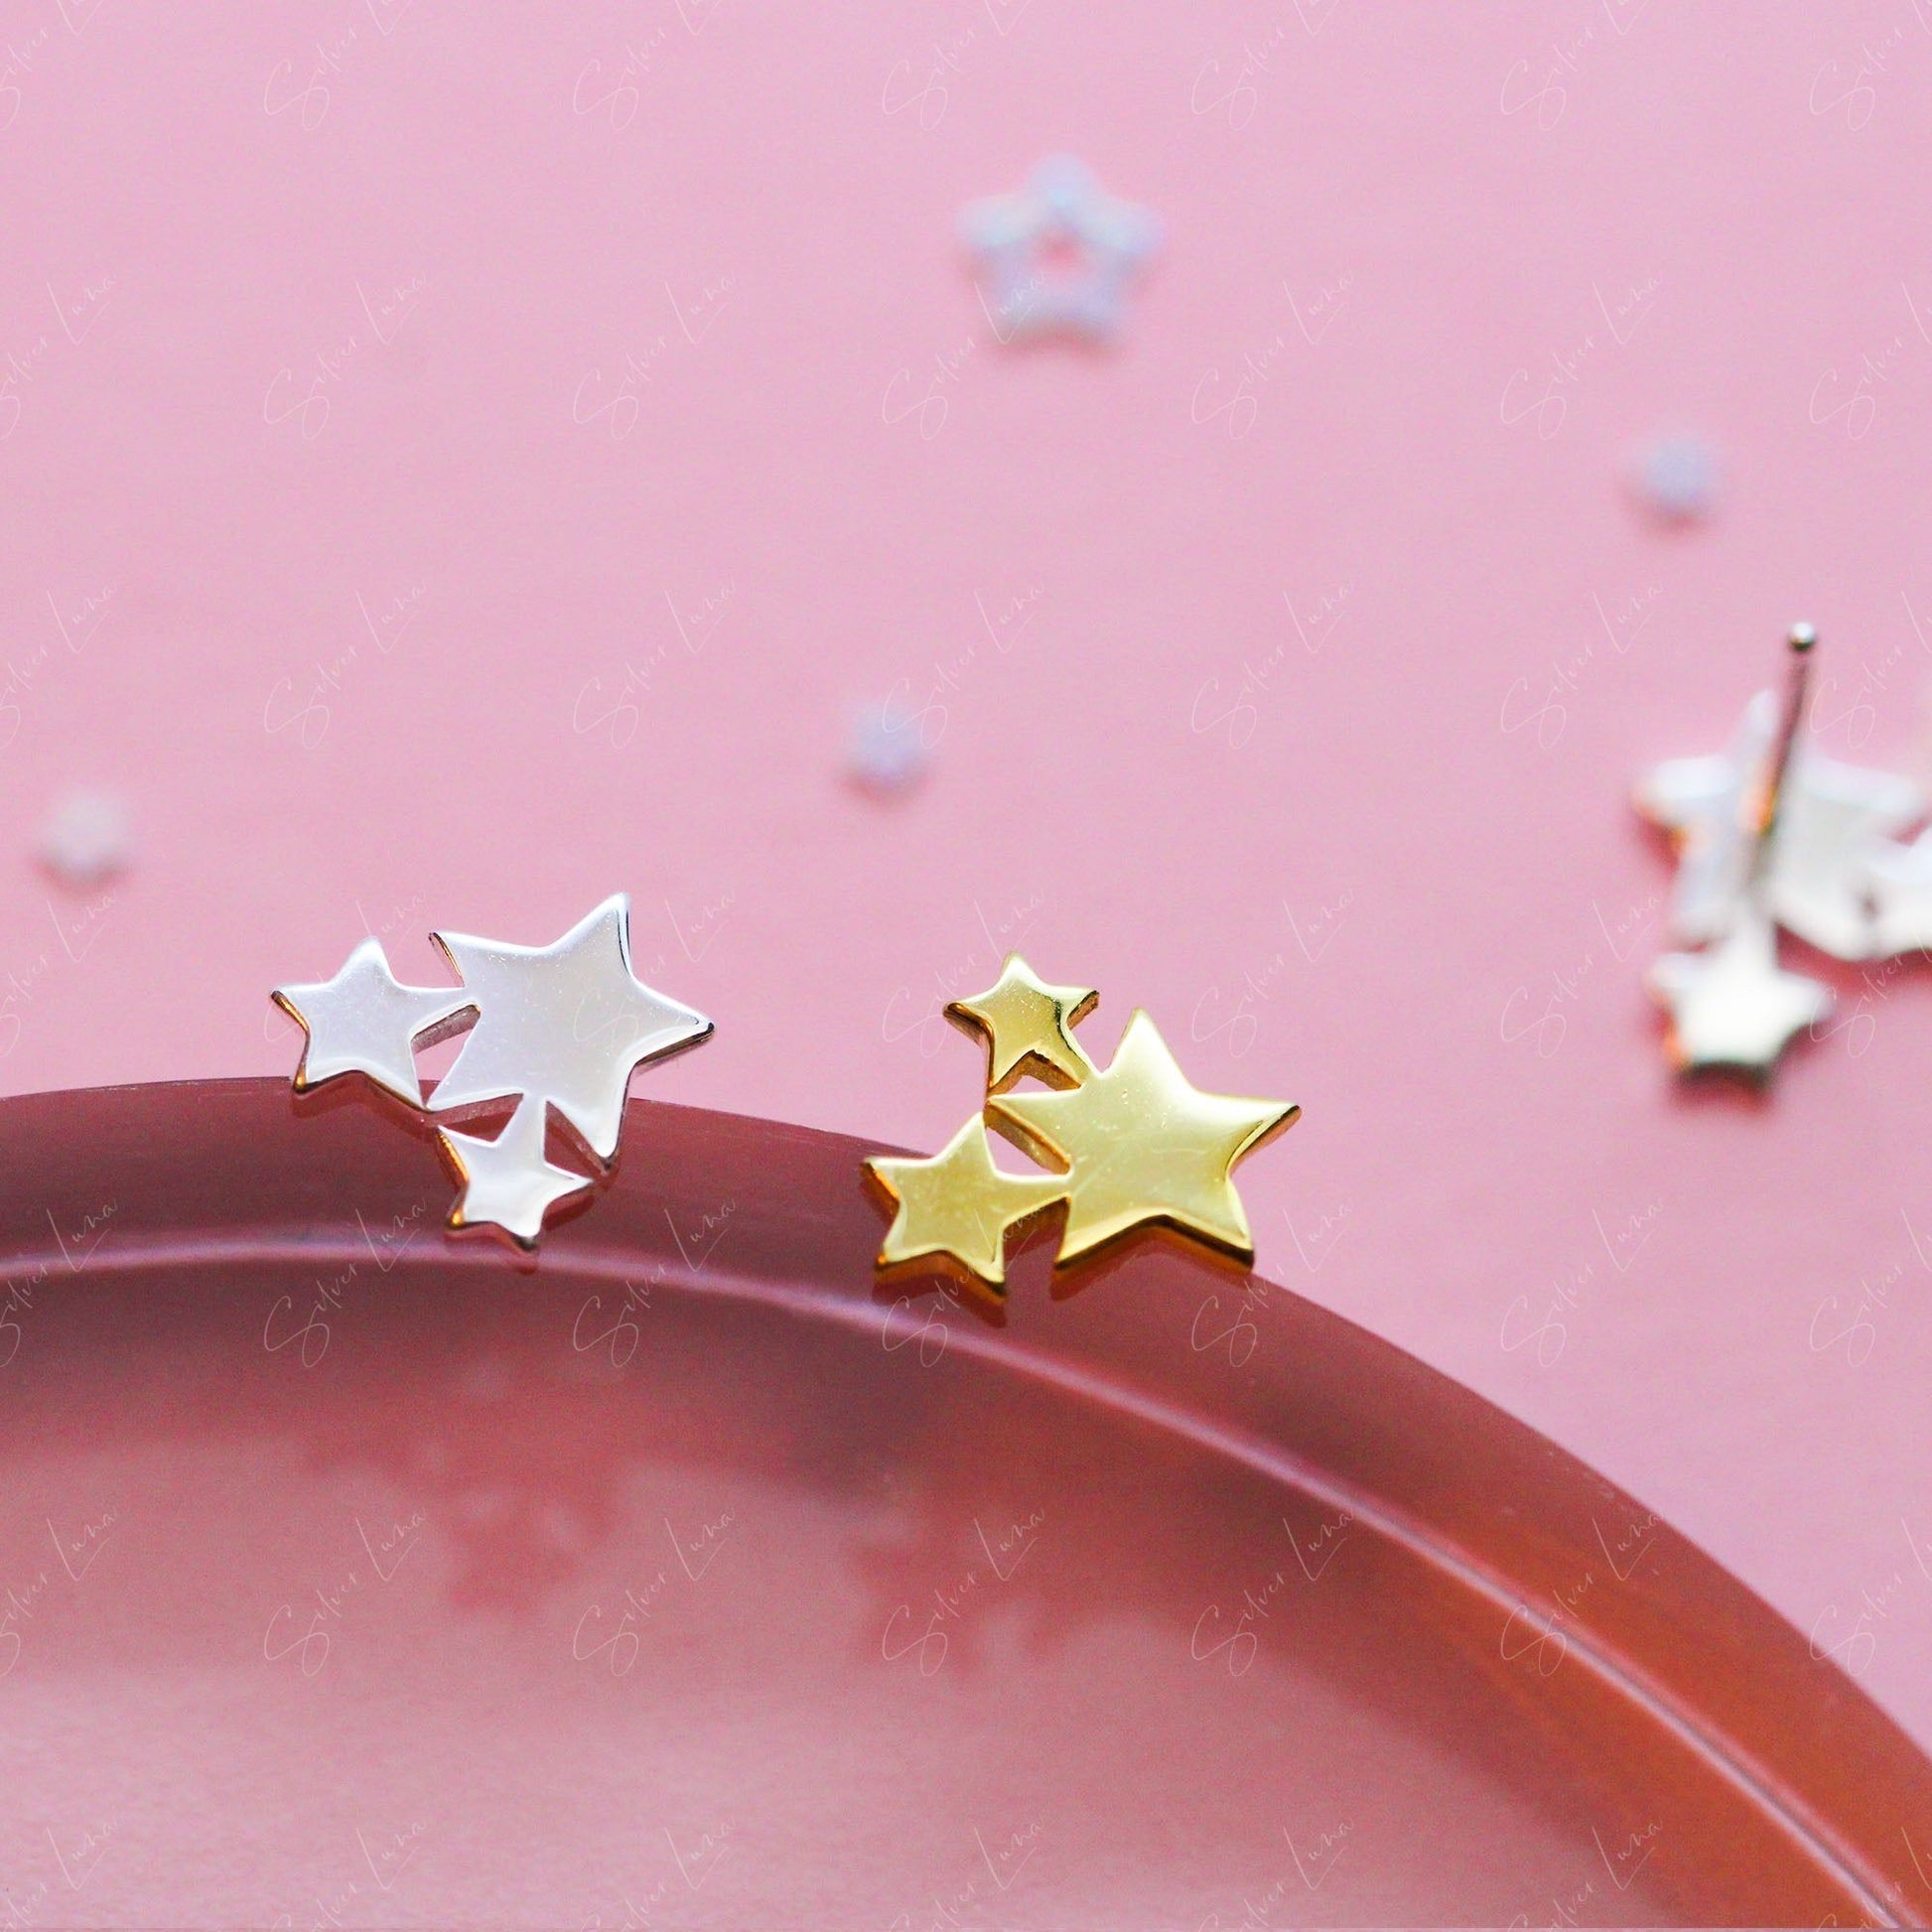 tiny star stud earrings